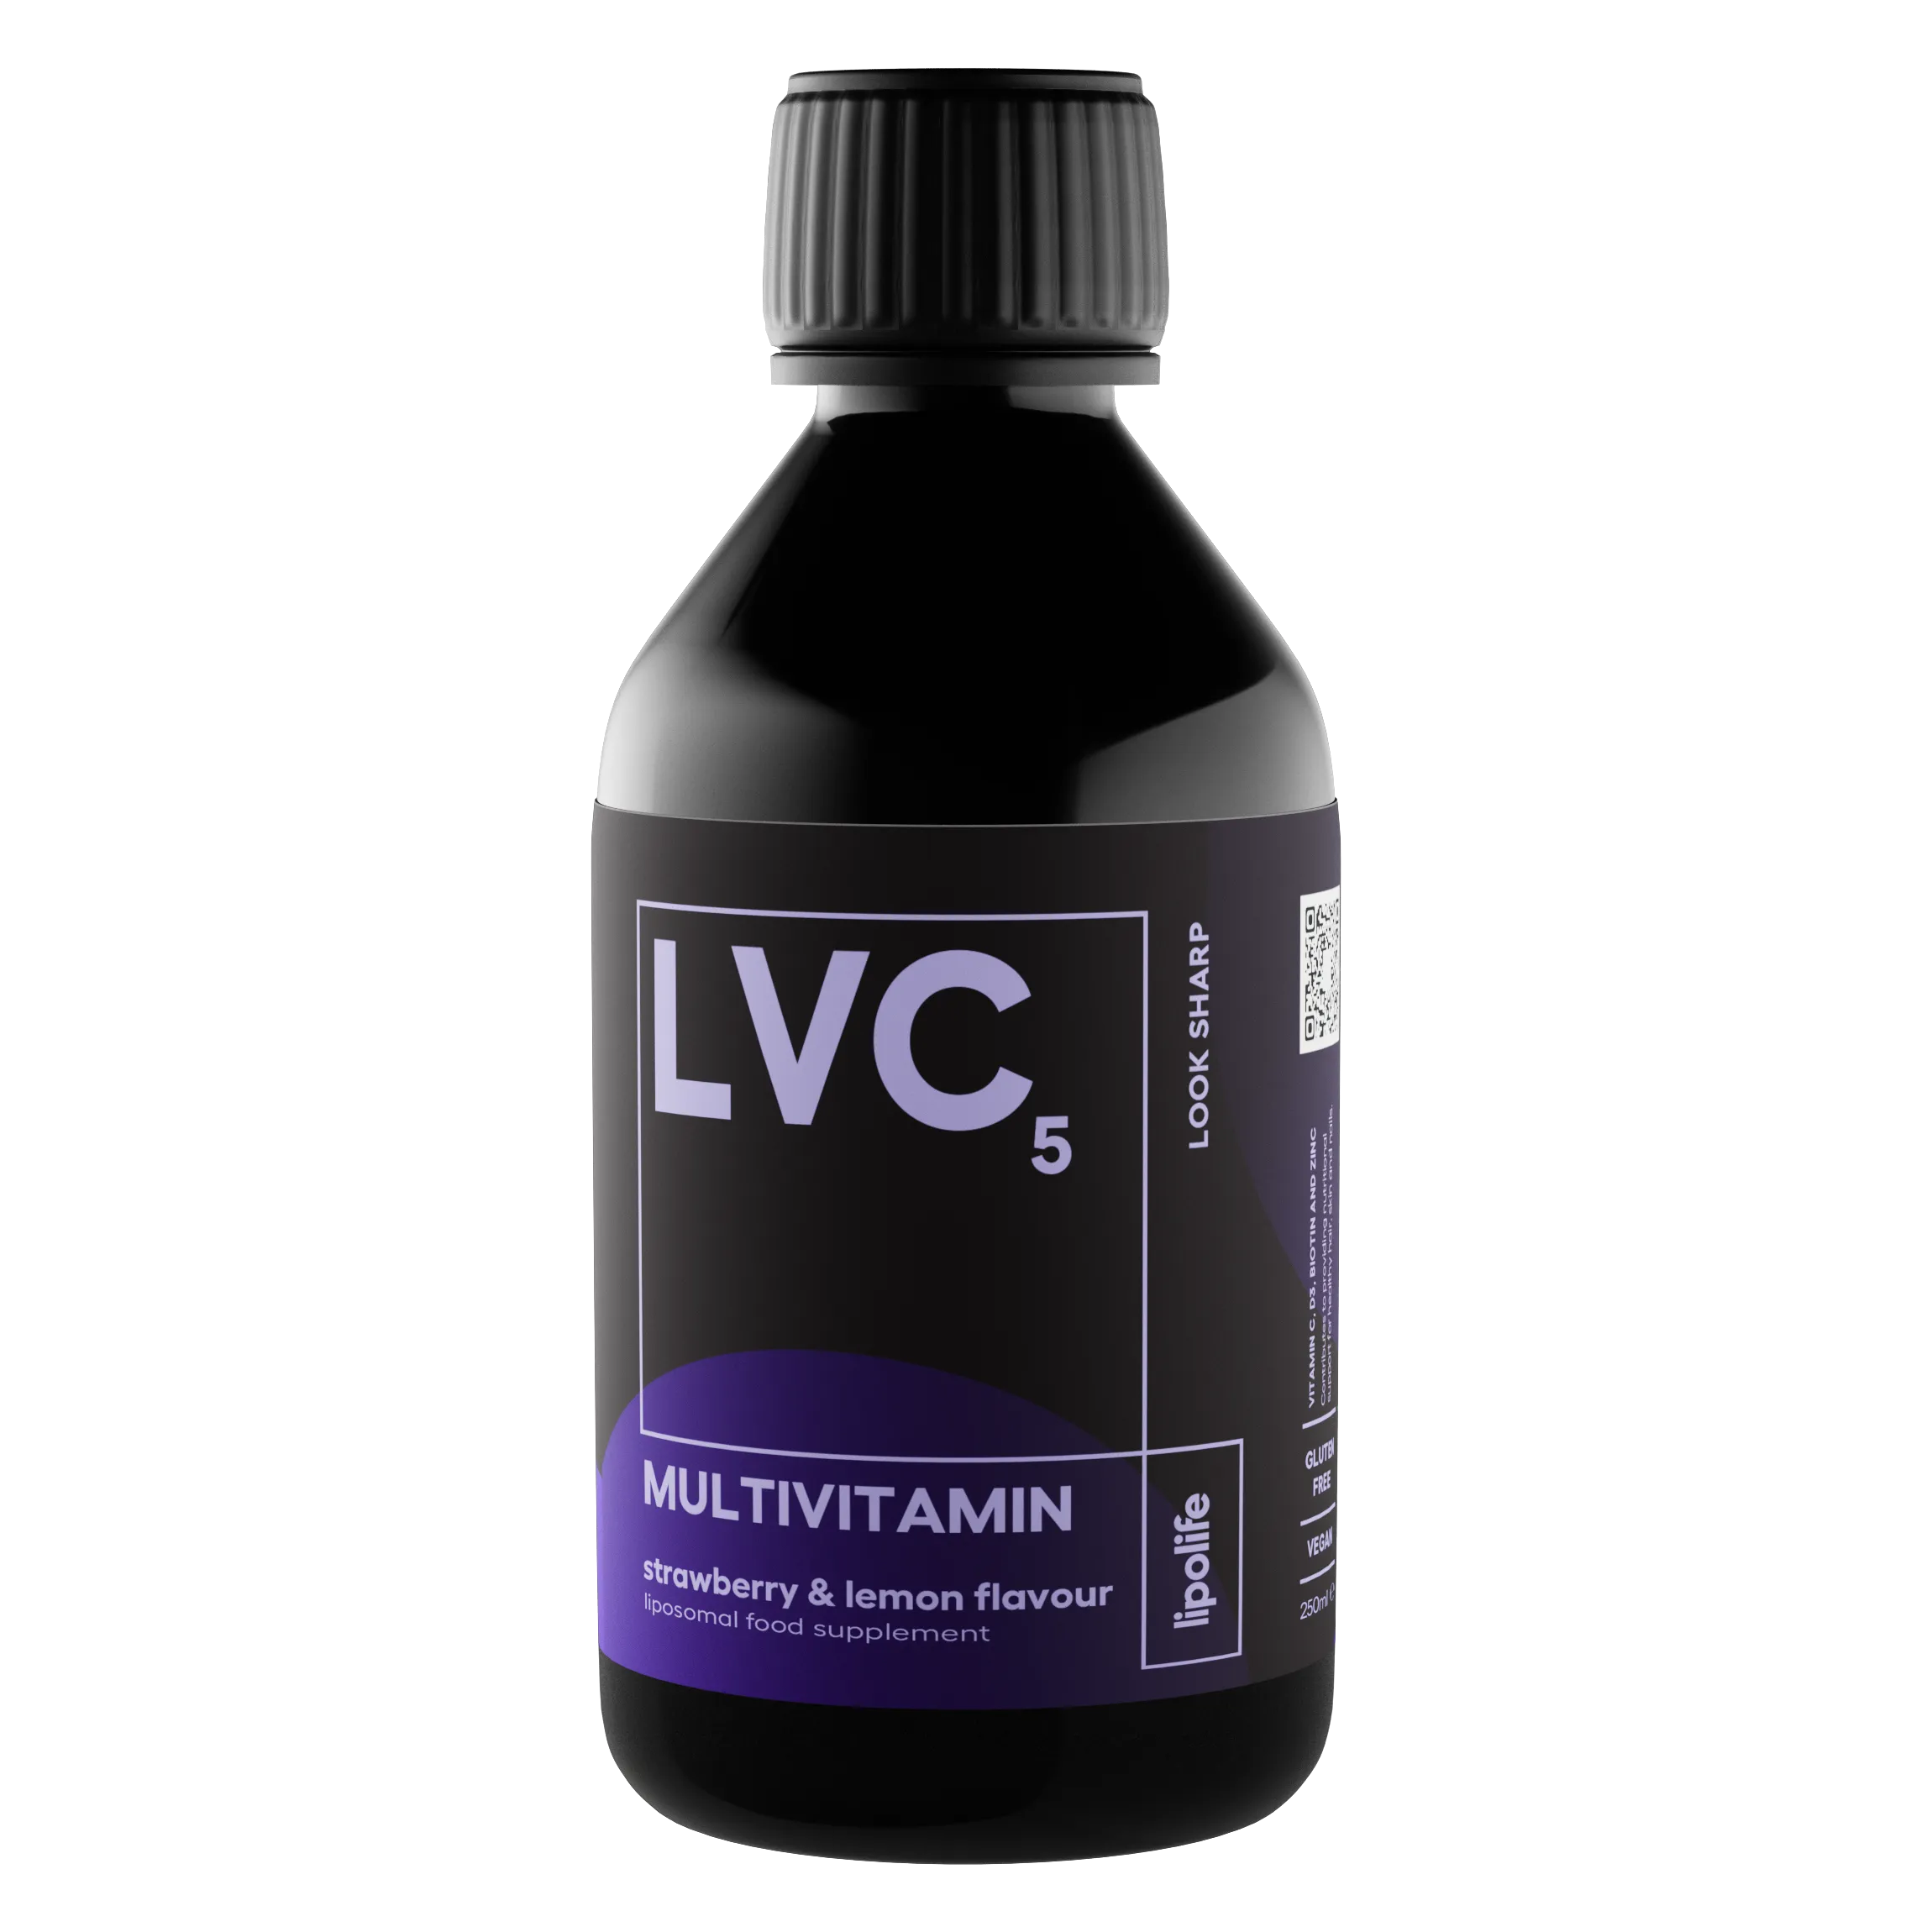 LVC5 - течен и липозомен мултивитамин - ягода и лимон, 240 мл.